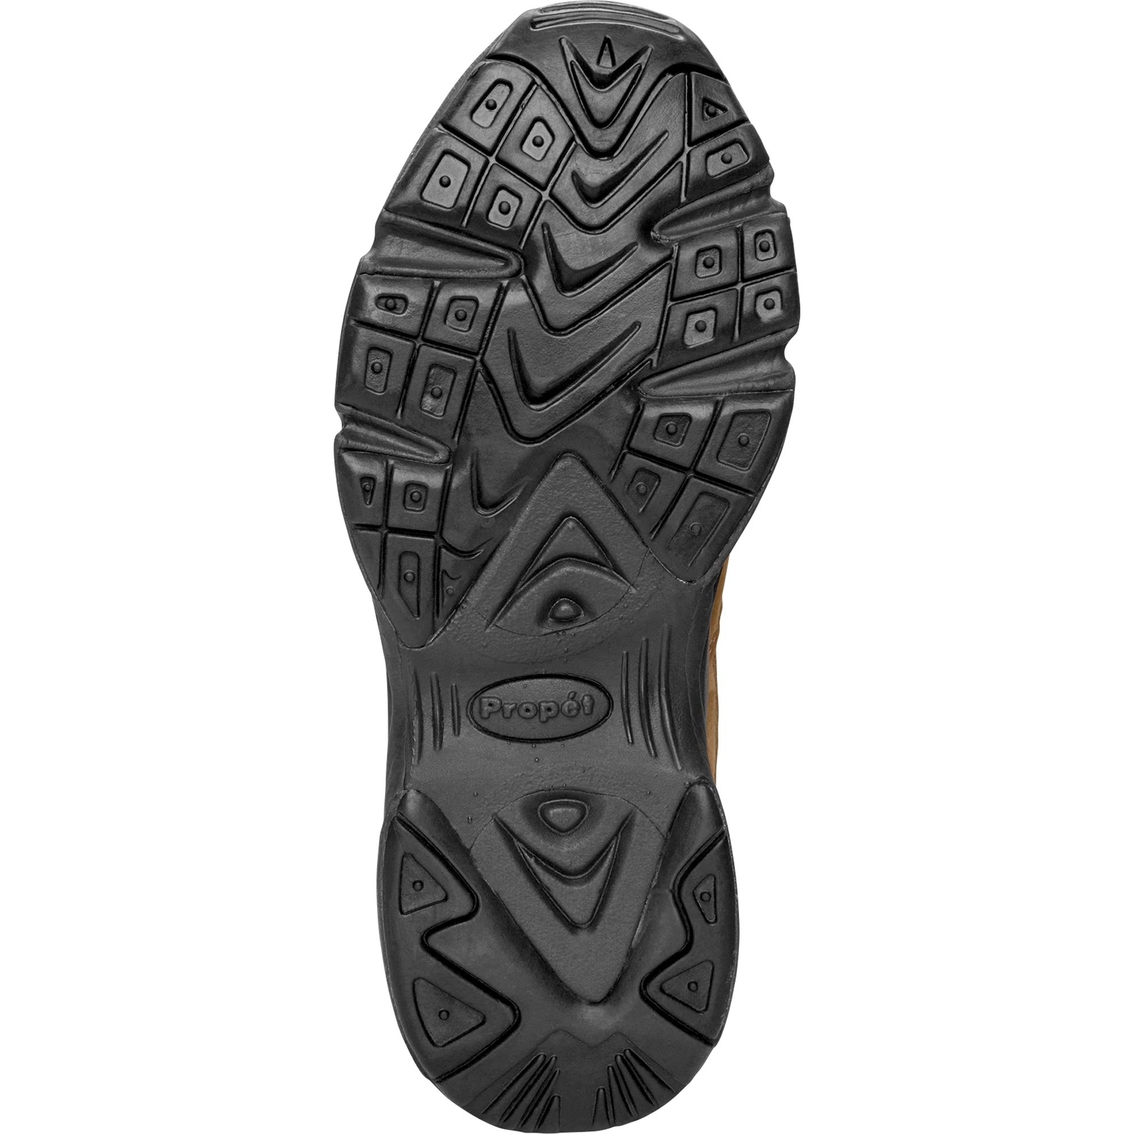 Propet Men's Stability Walker ACTIVE A5500 Shoe - Image 4 of 4